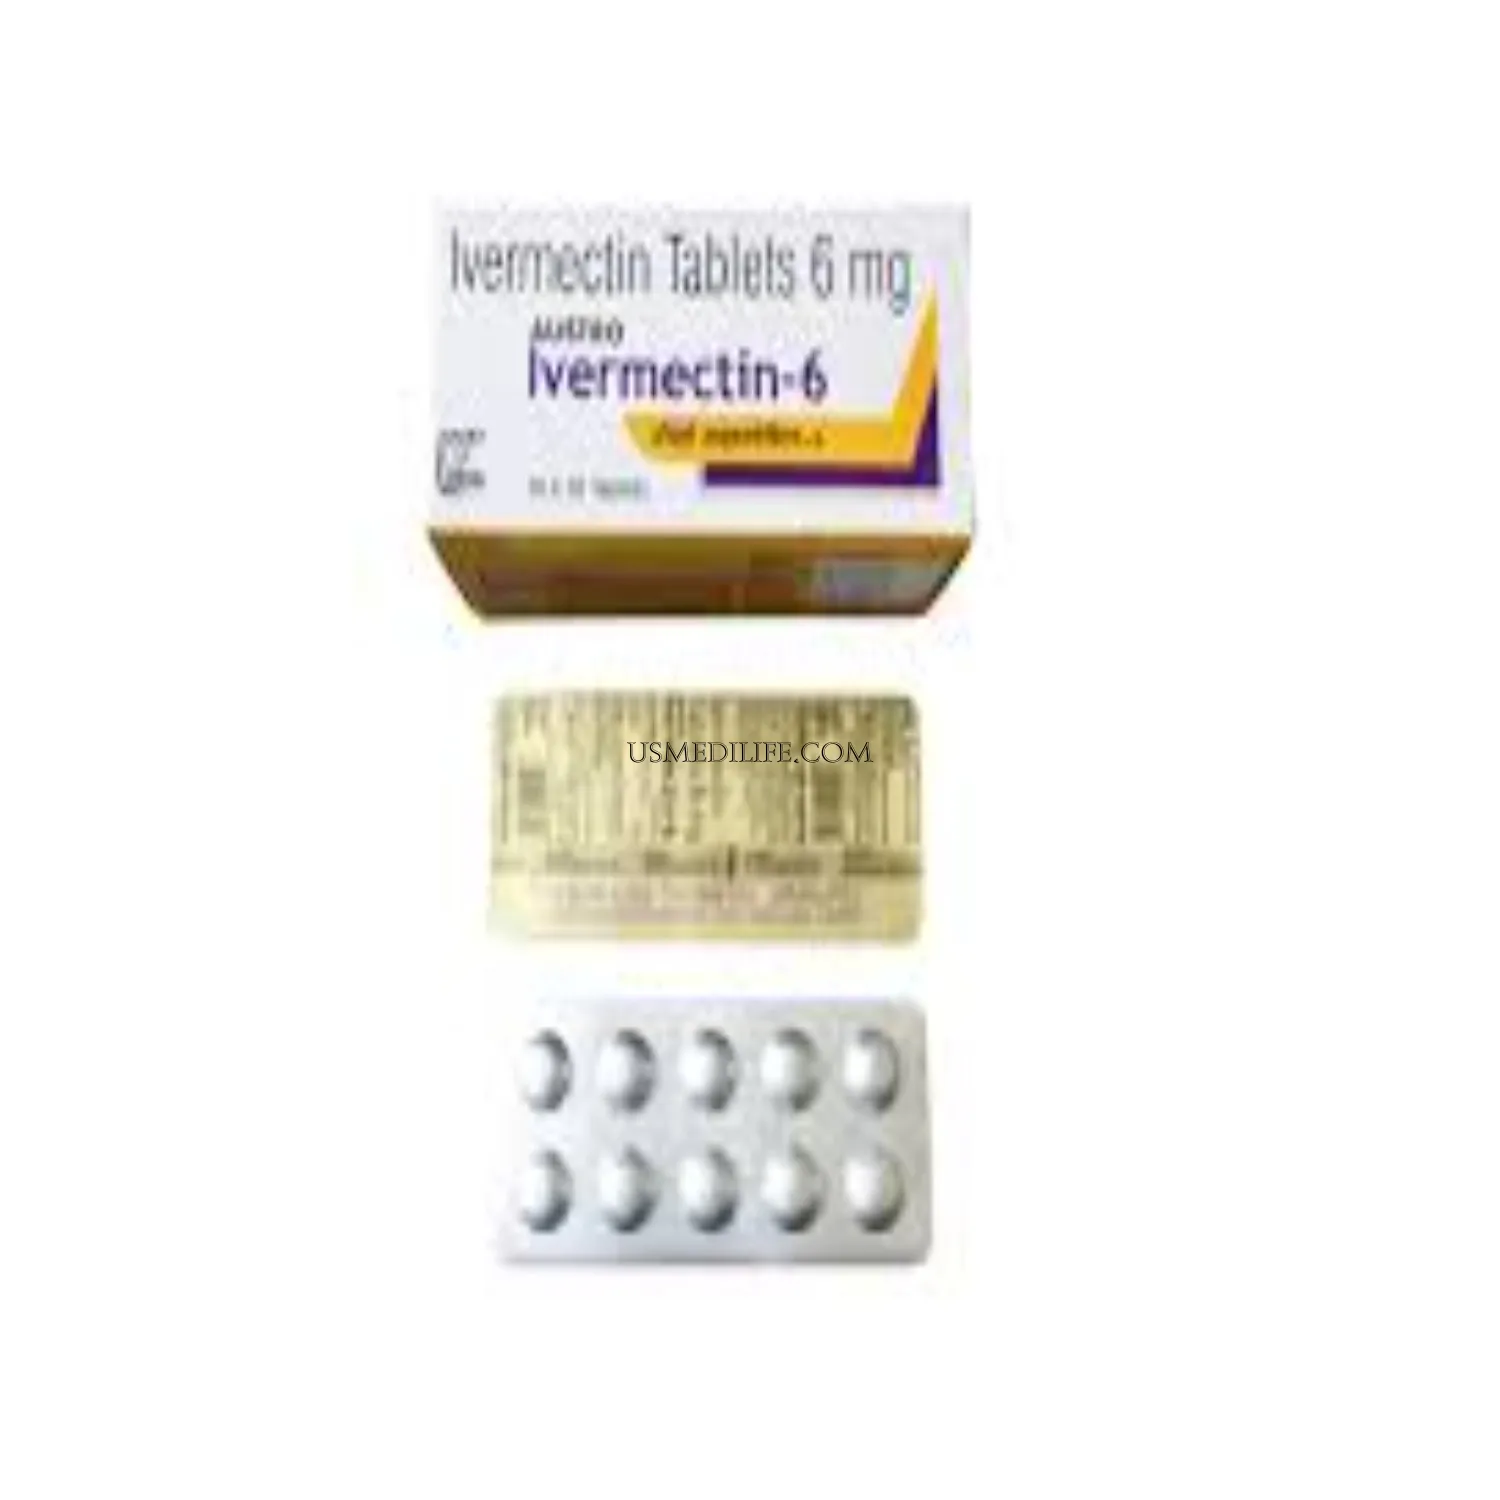 austro-ivermectin-6-mg                    